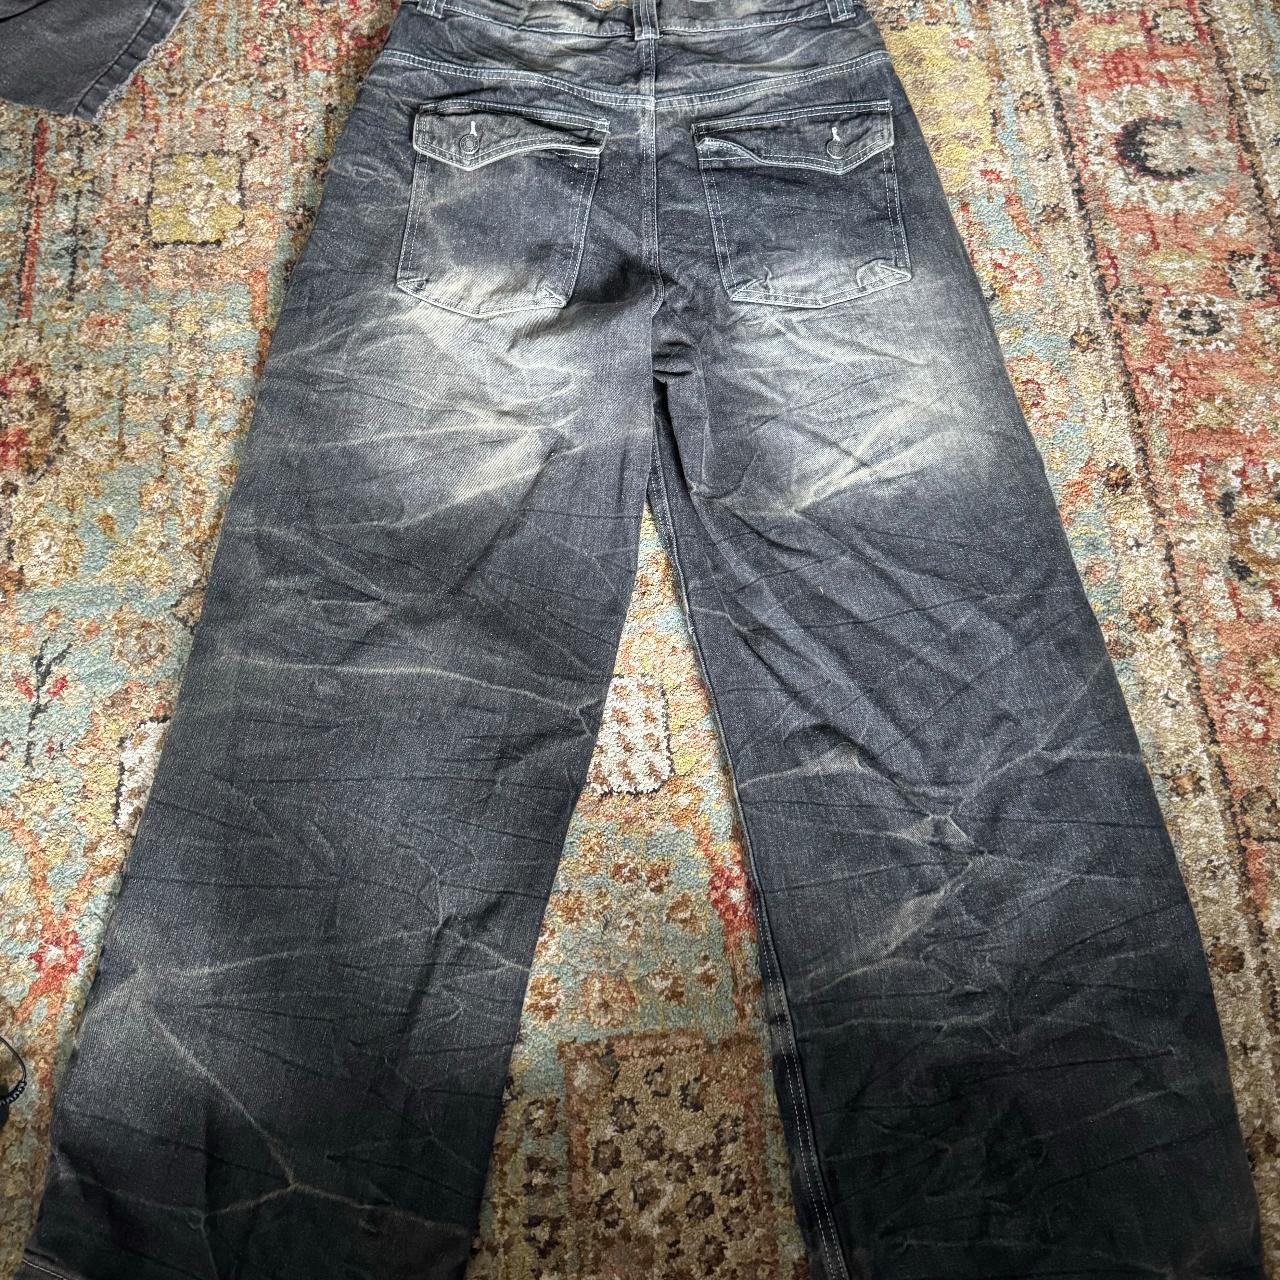 Washed Black Razor Jeans